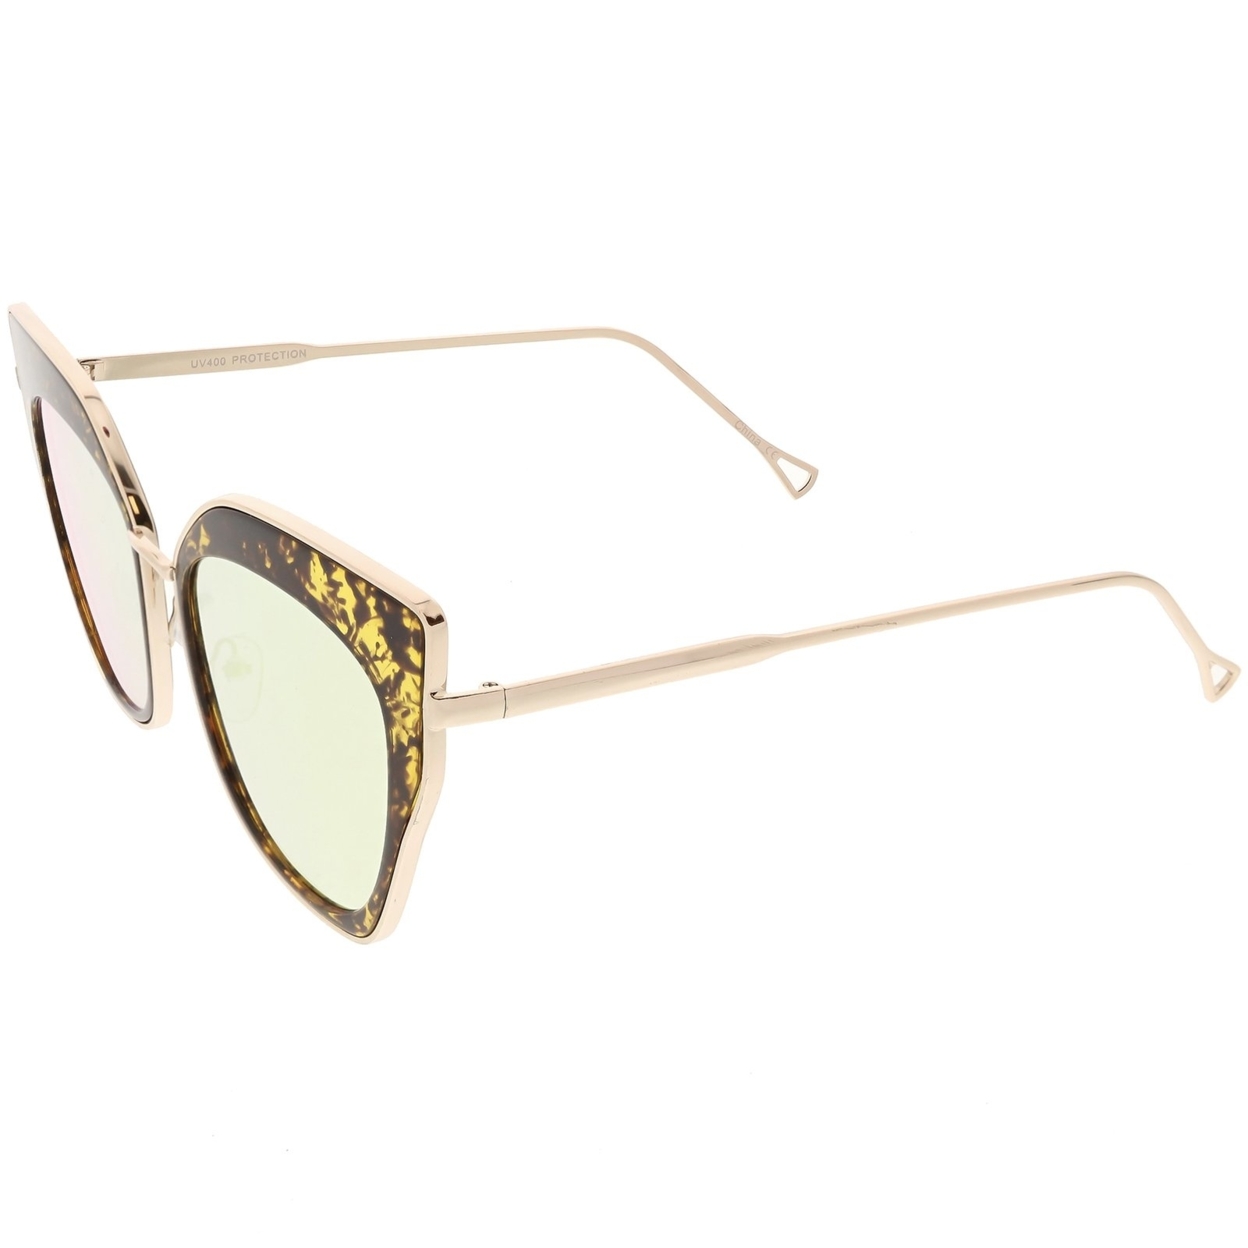 Oversize Pointed Cat Eye Sunglasses Slim Metal Nose Bridge Square Colored Mirror Lens 58mm - Gold Black / Magenta Mirror